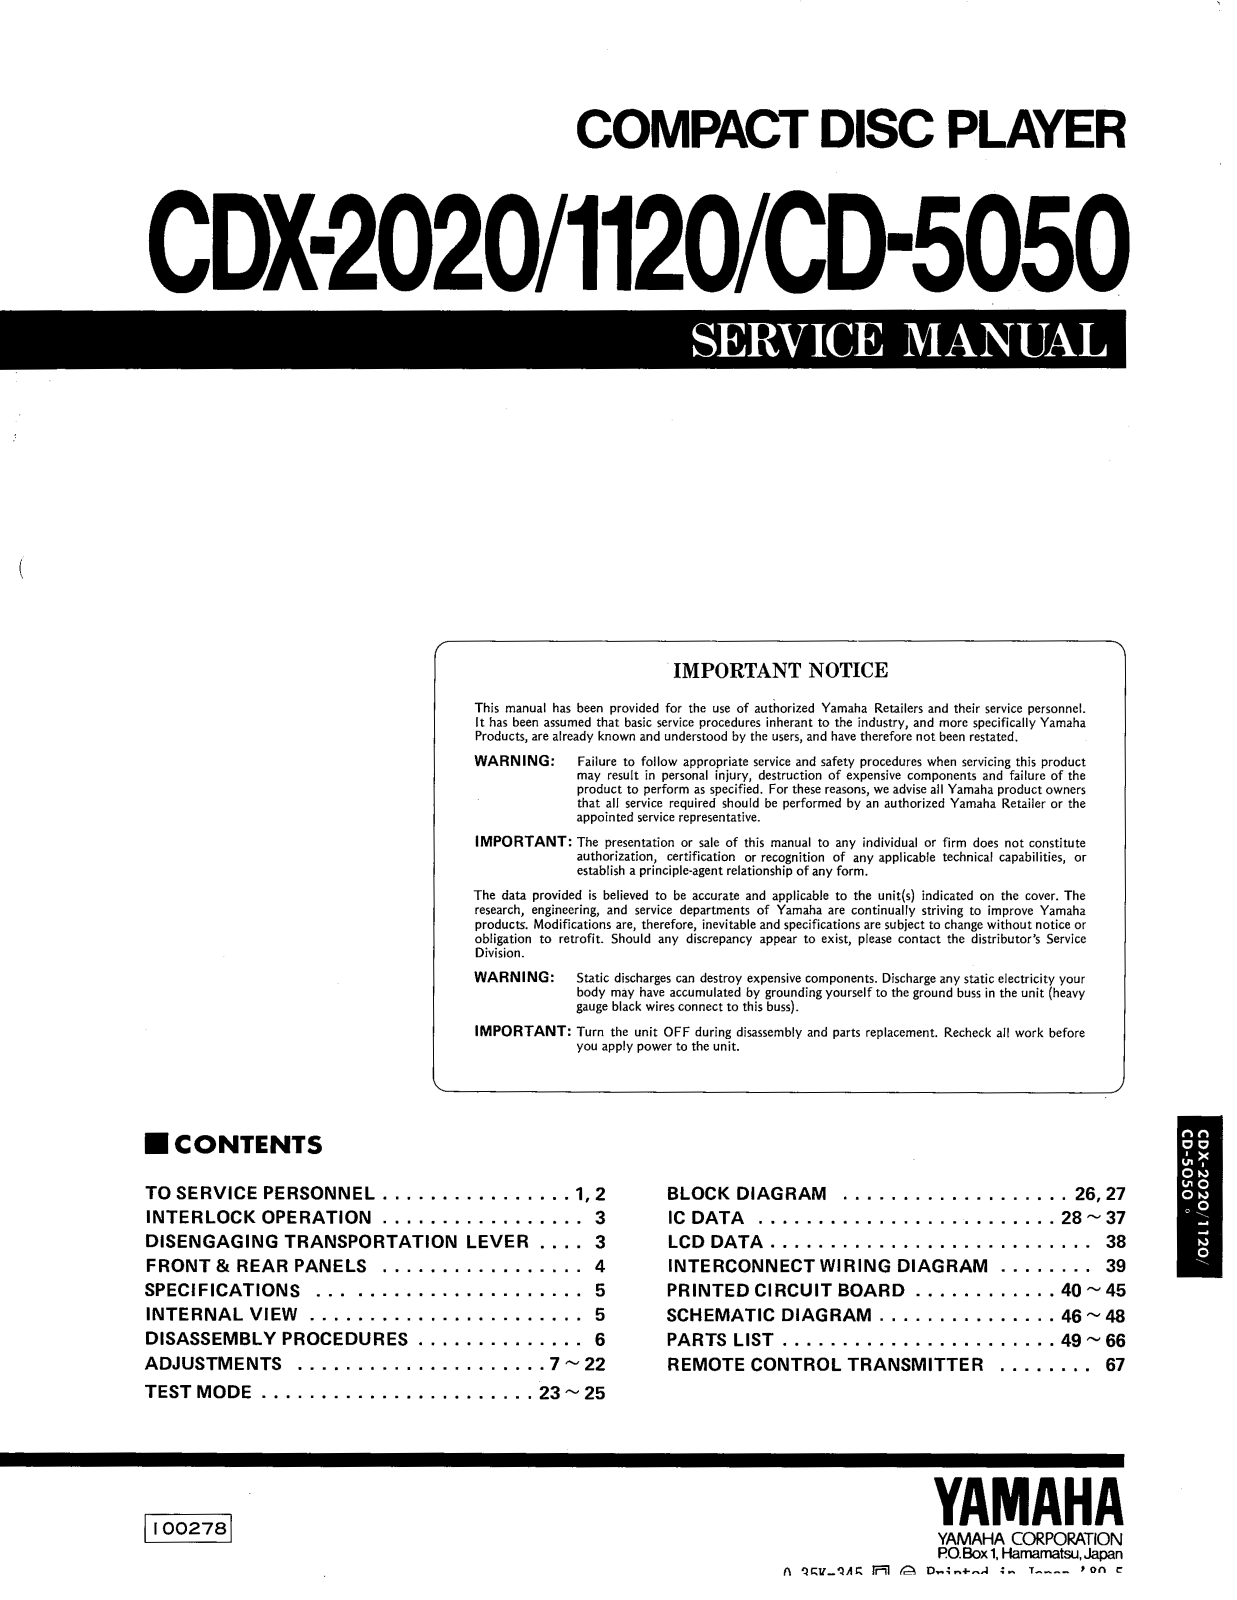 Yamaha CD-5050 Service Manual